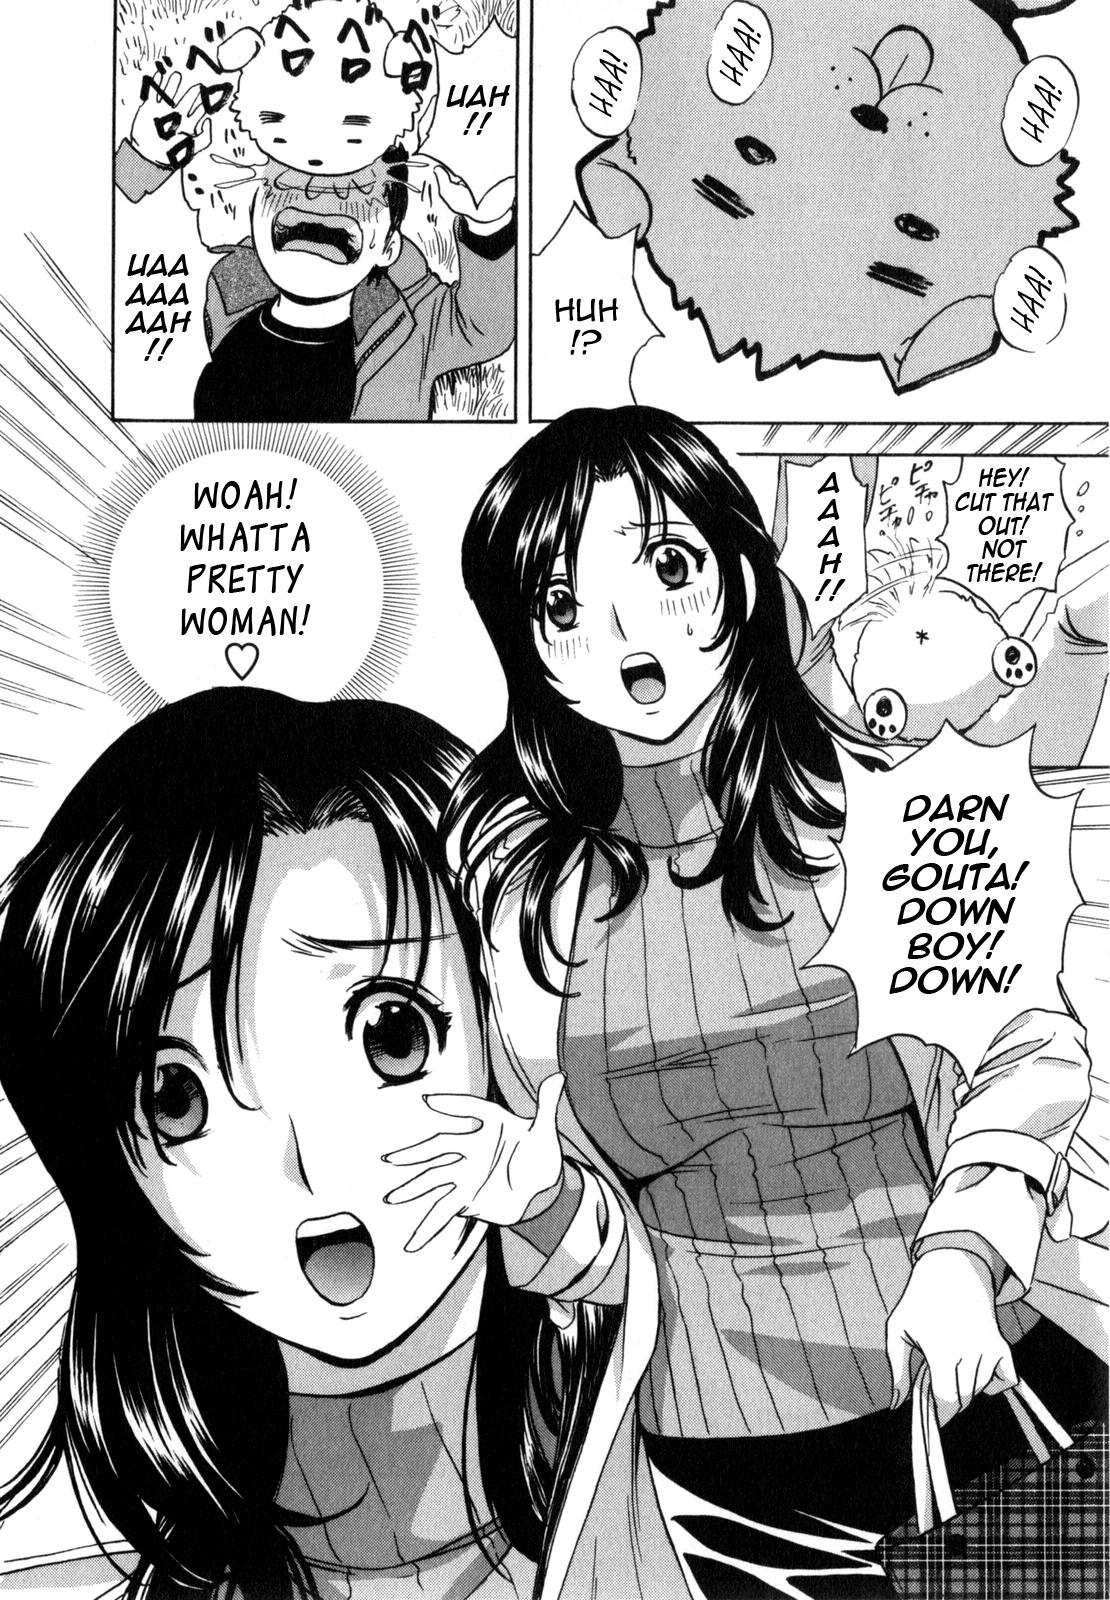 [Hidemaru] Life with Married Women Just Like a Manga 1 - Ch. 1-4 [English] {Tadanohito} 10